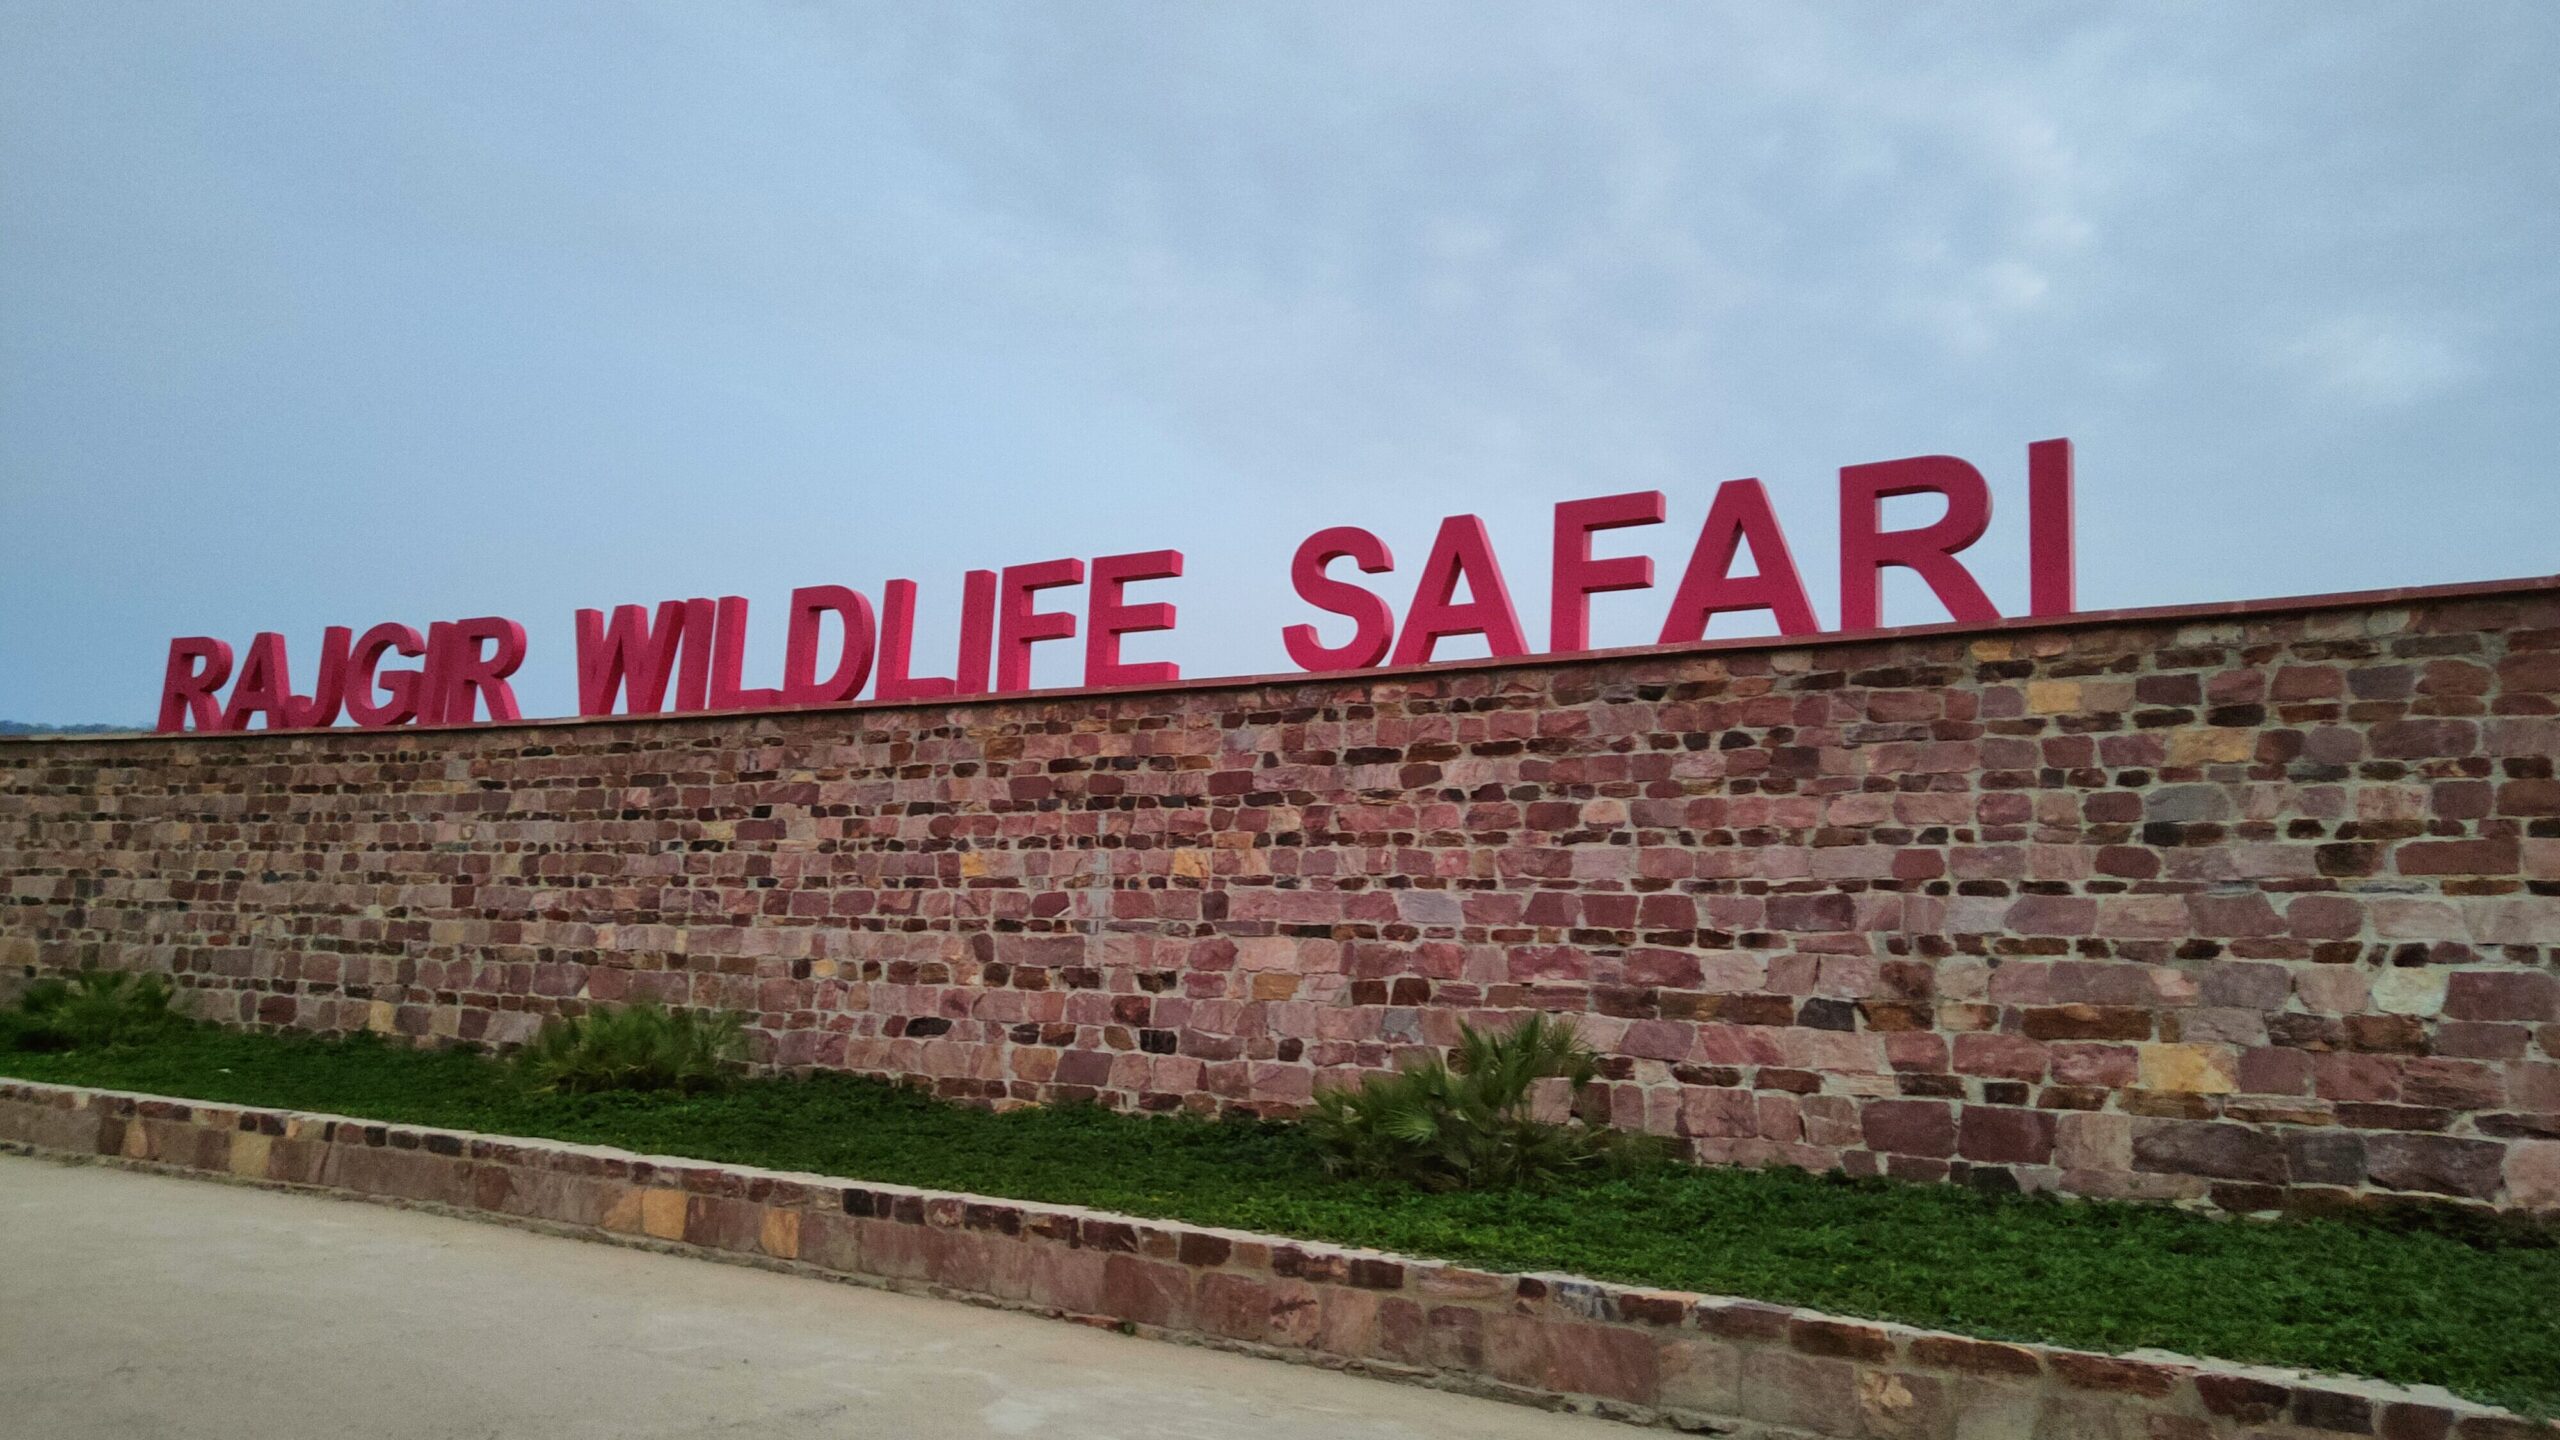 Rajgir Wildlife Safari is also know as Rajgir Zoo Safari.